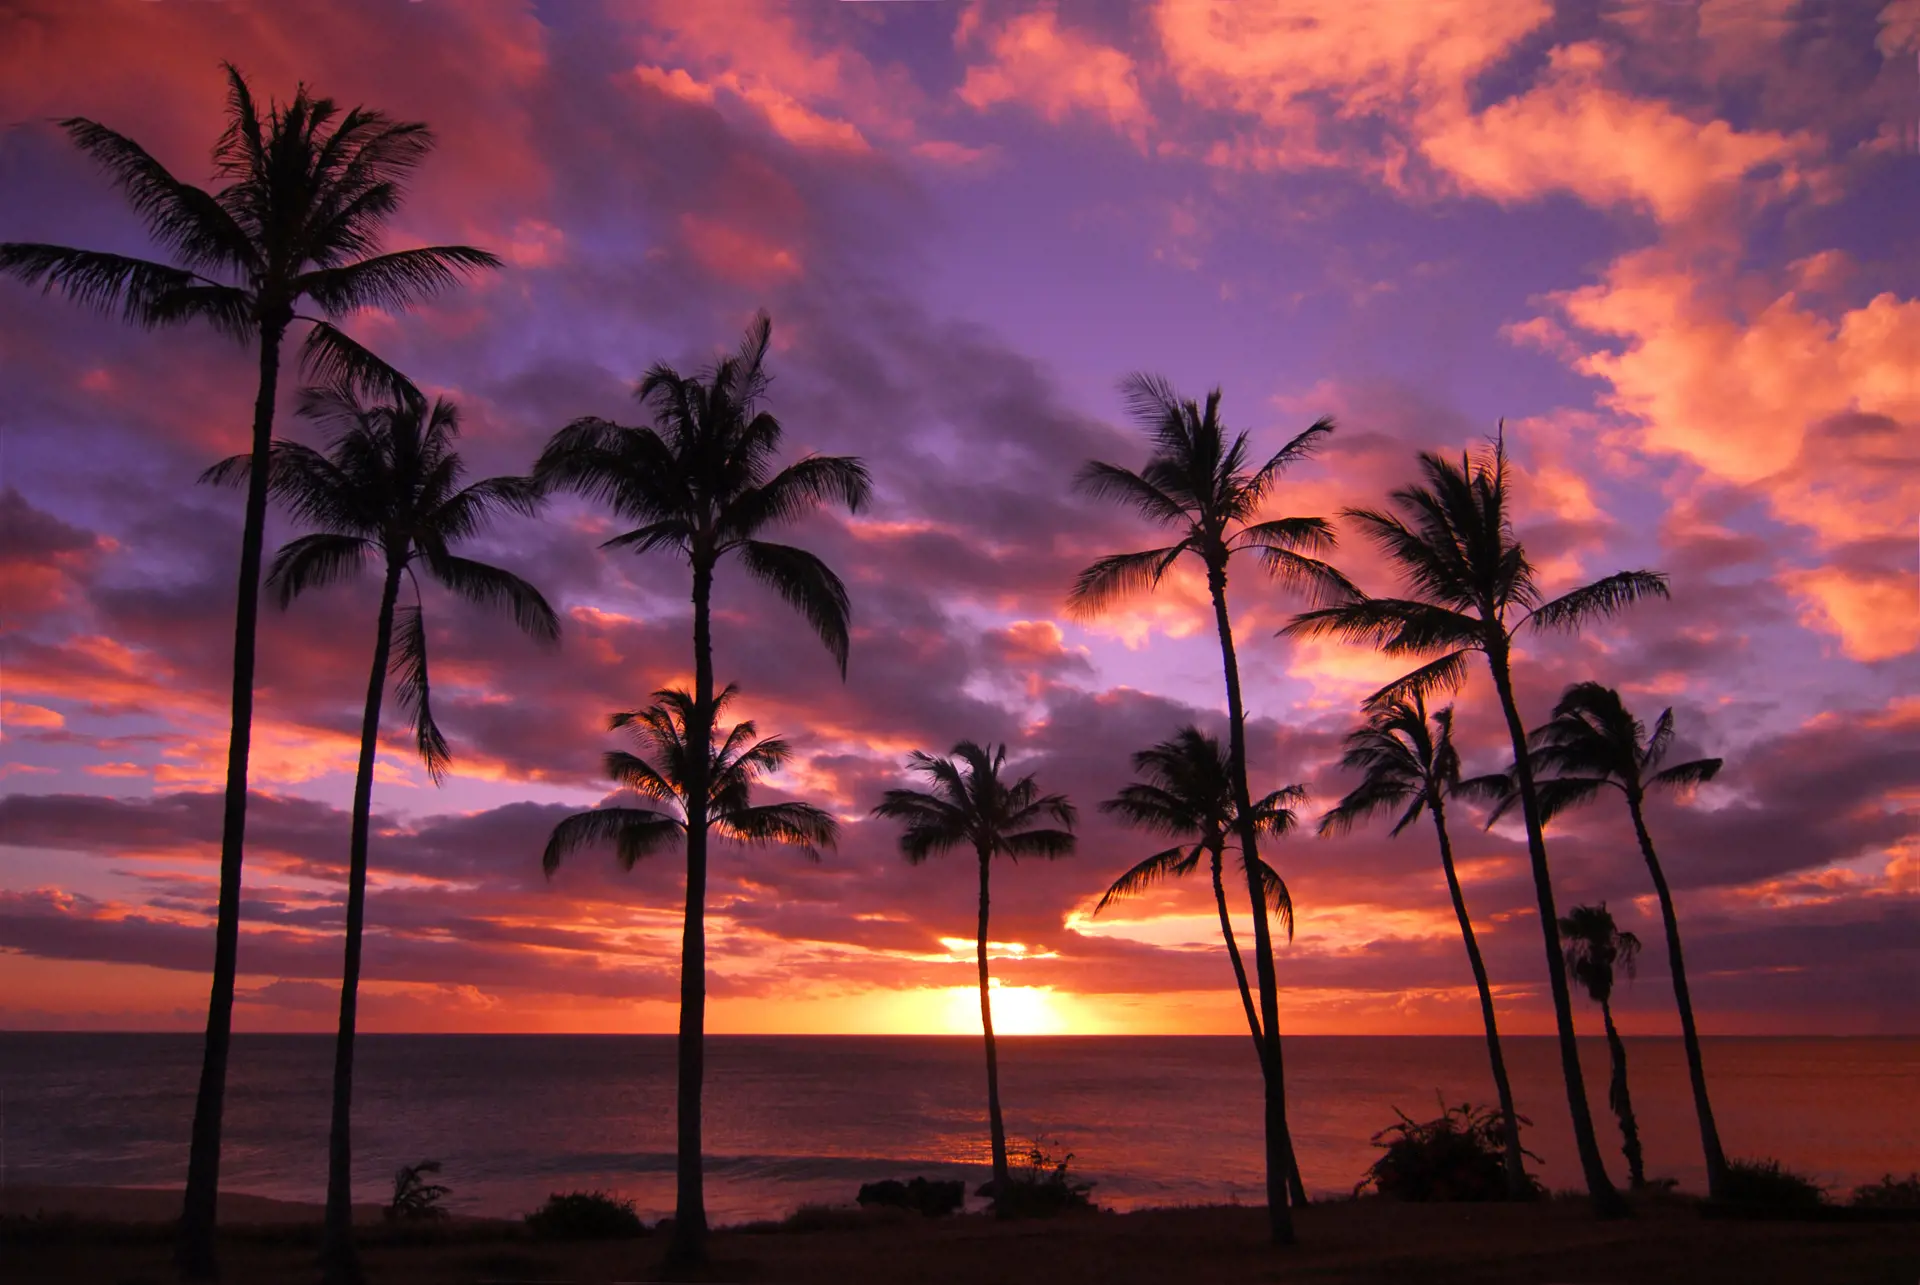 Hawaii - solnedgangen over Stillehavet kan være en farverig fornøjelse, Check Point Travel